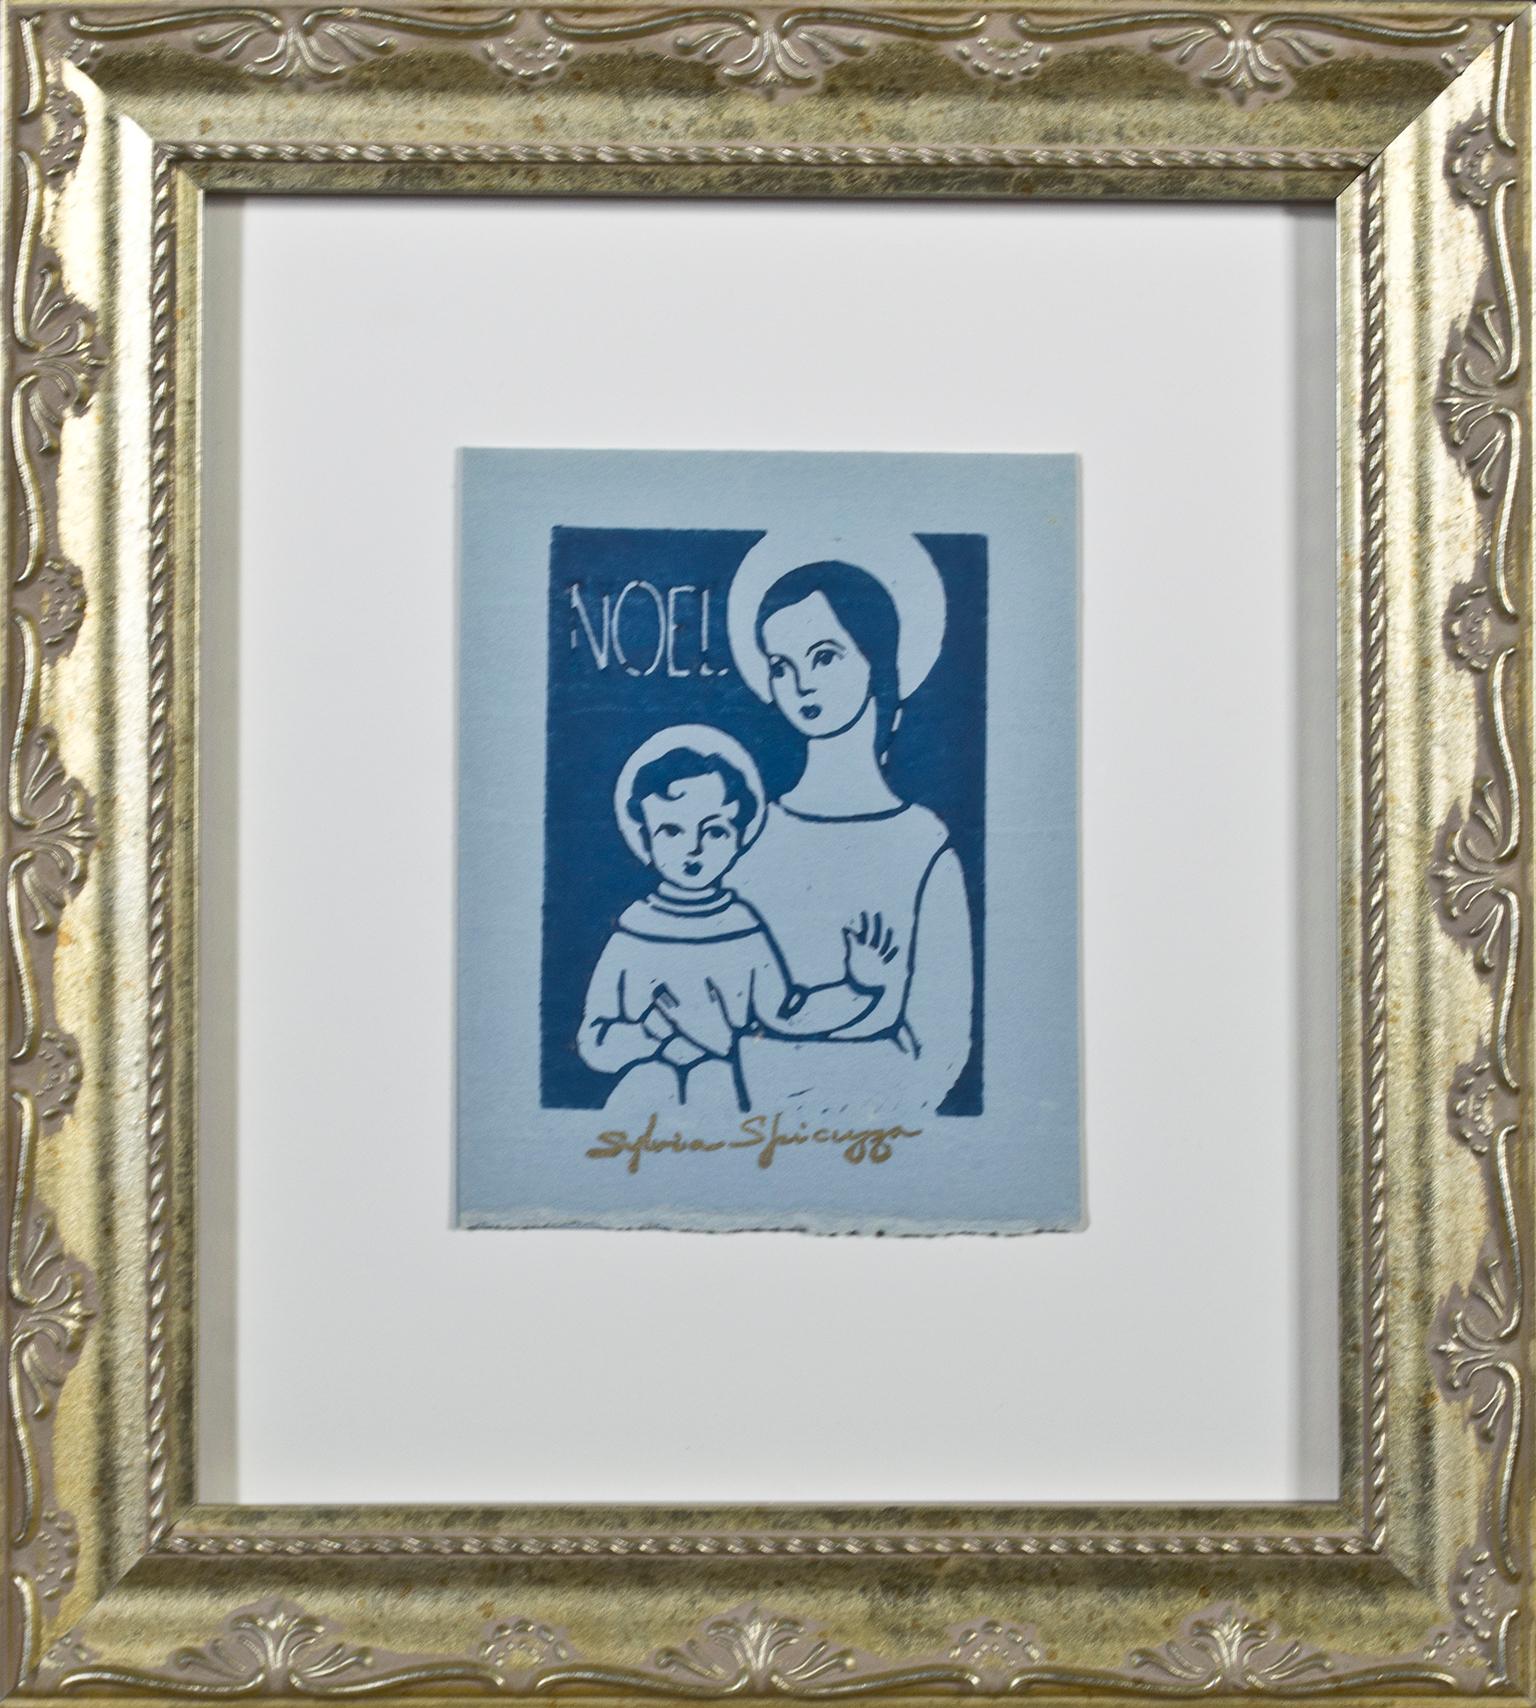 „Noel“, religiöser Linoschliff auf blauem Papier, gestempelte Signatur von Sylvia Spicuzza